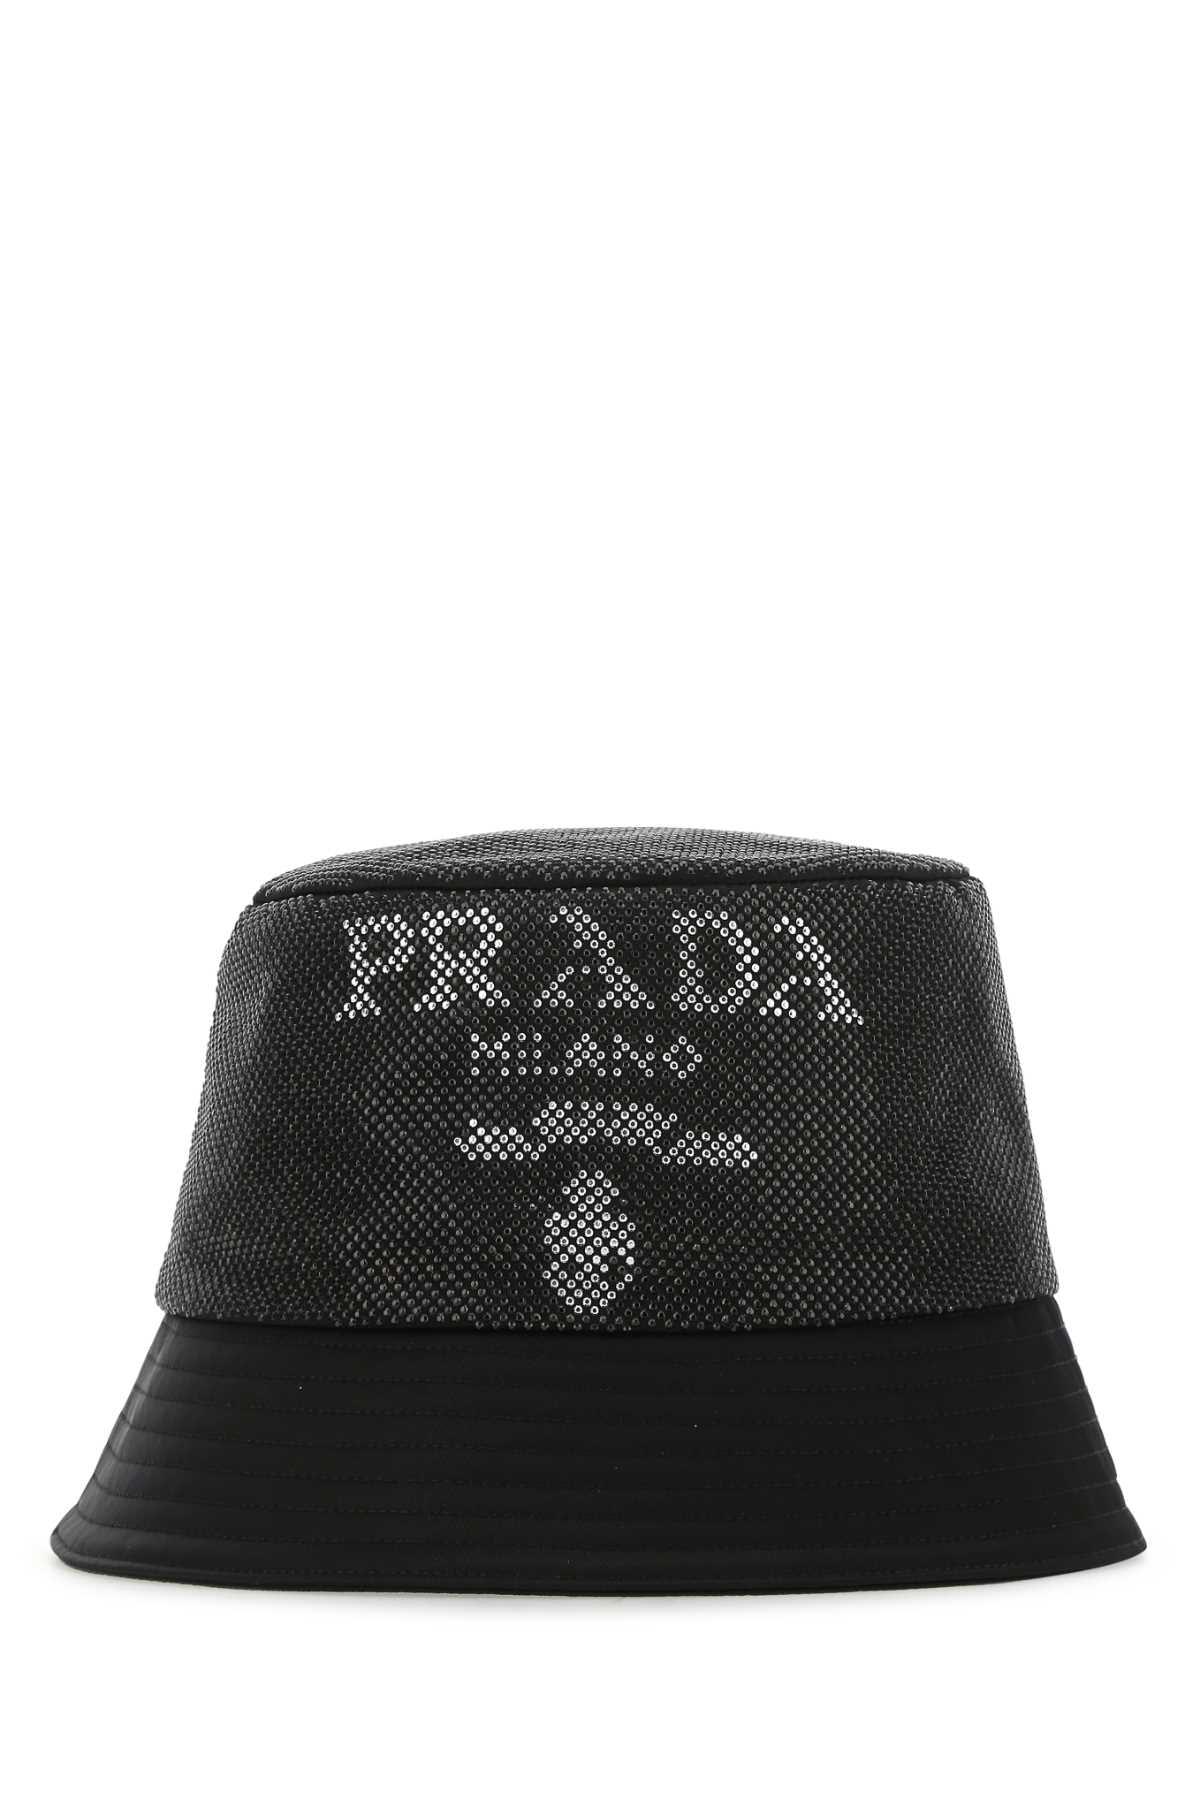 Prada Logo Embellished Bucket Hat